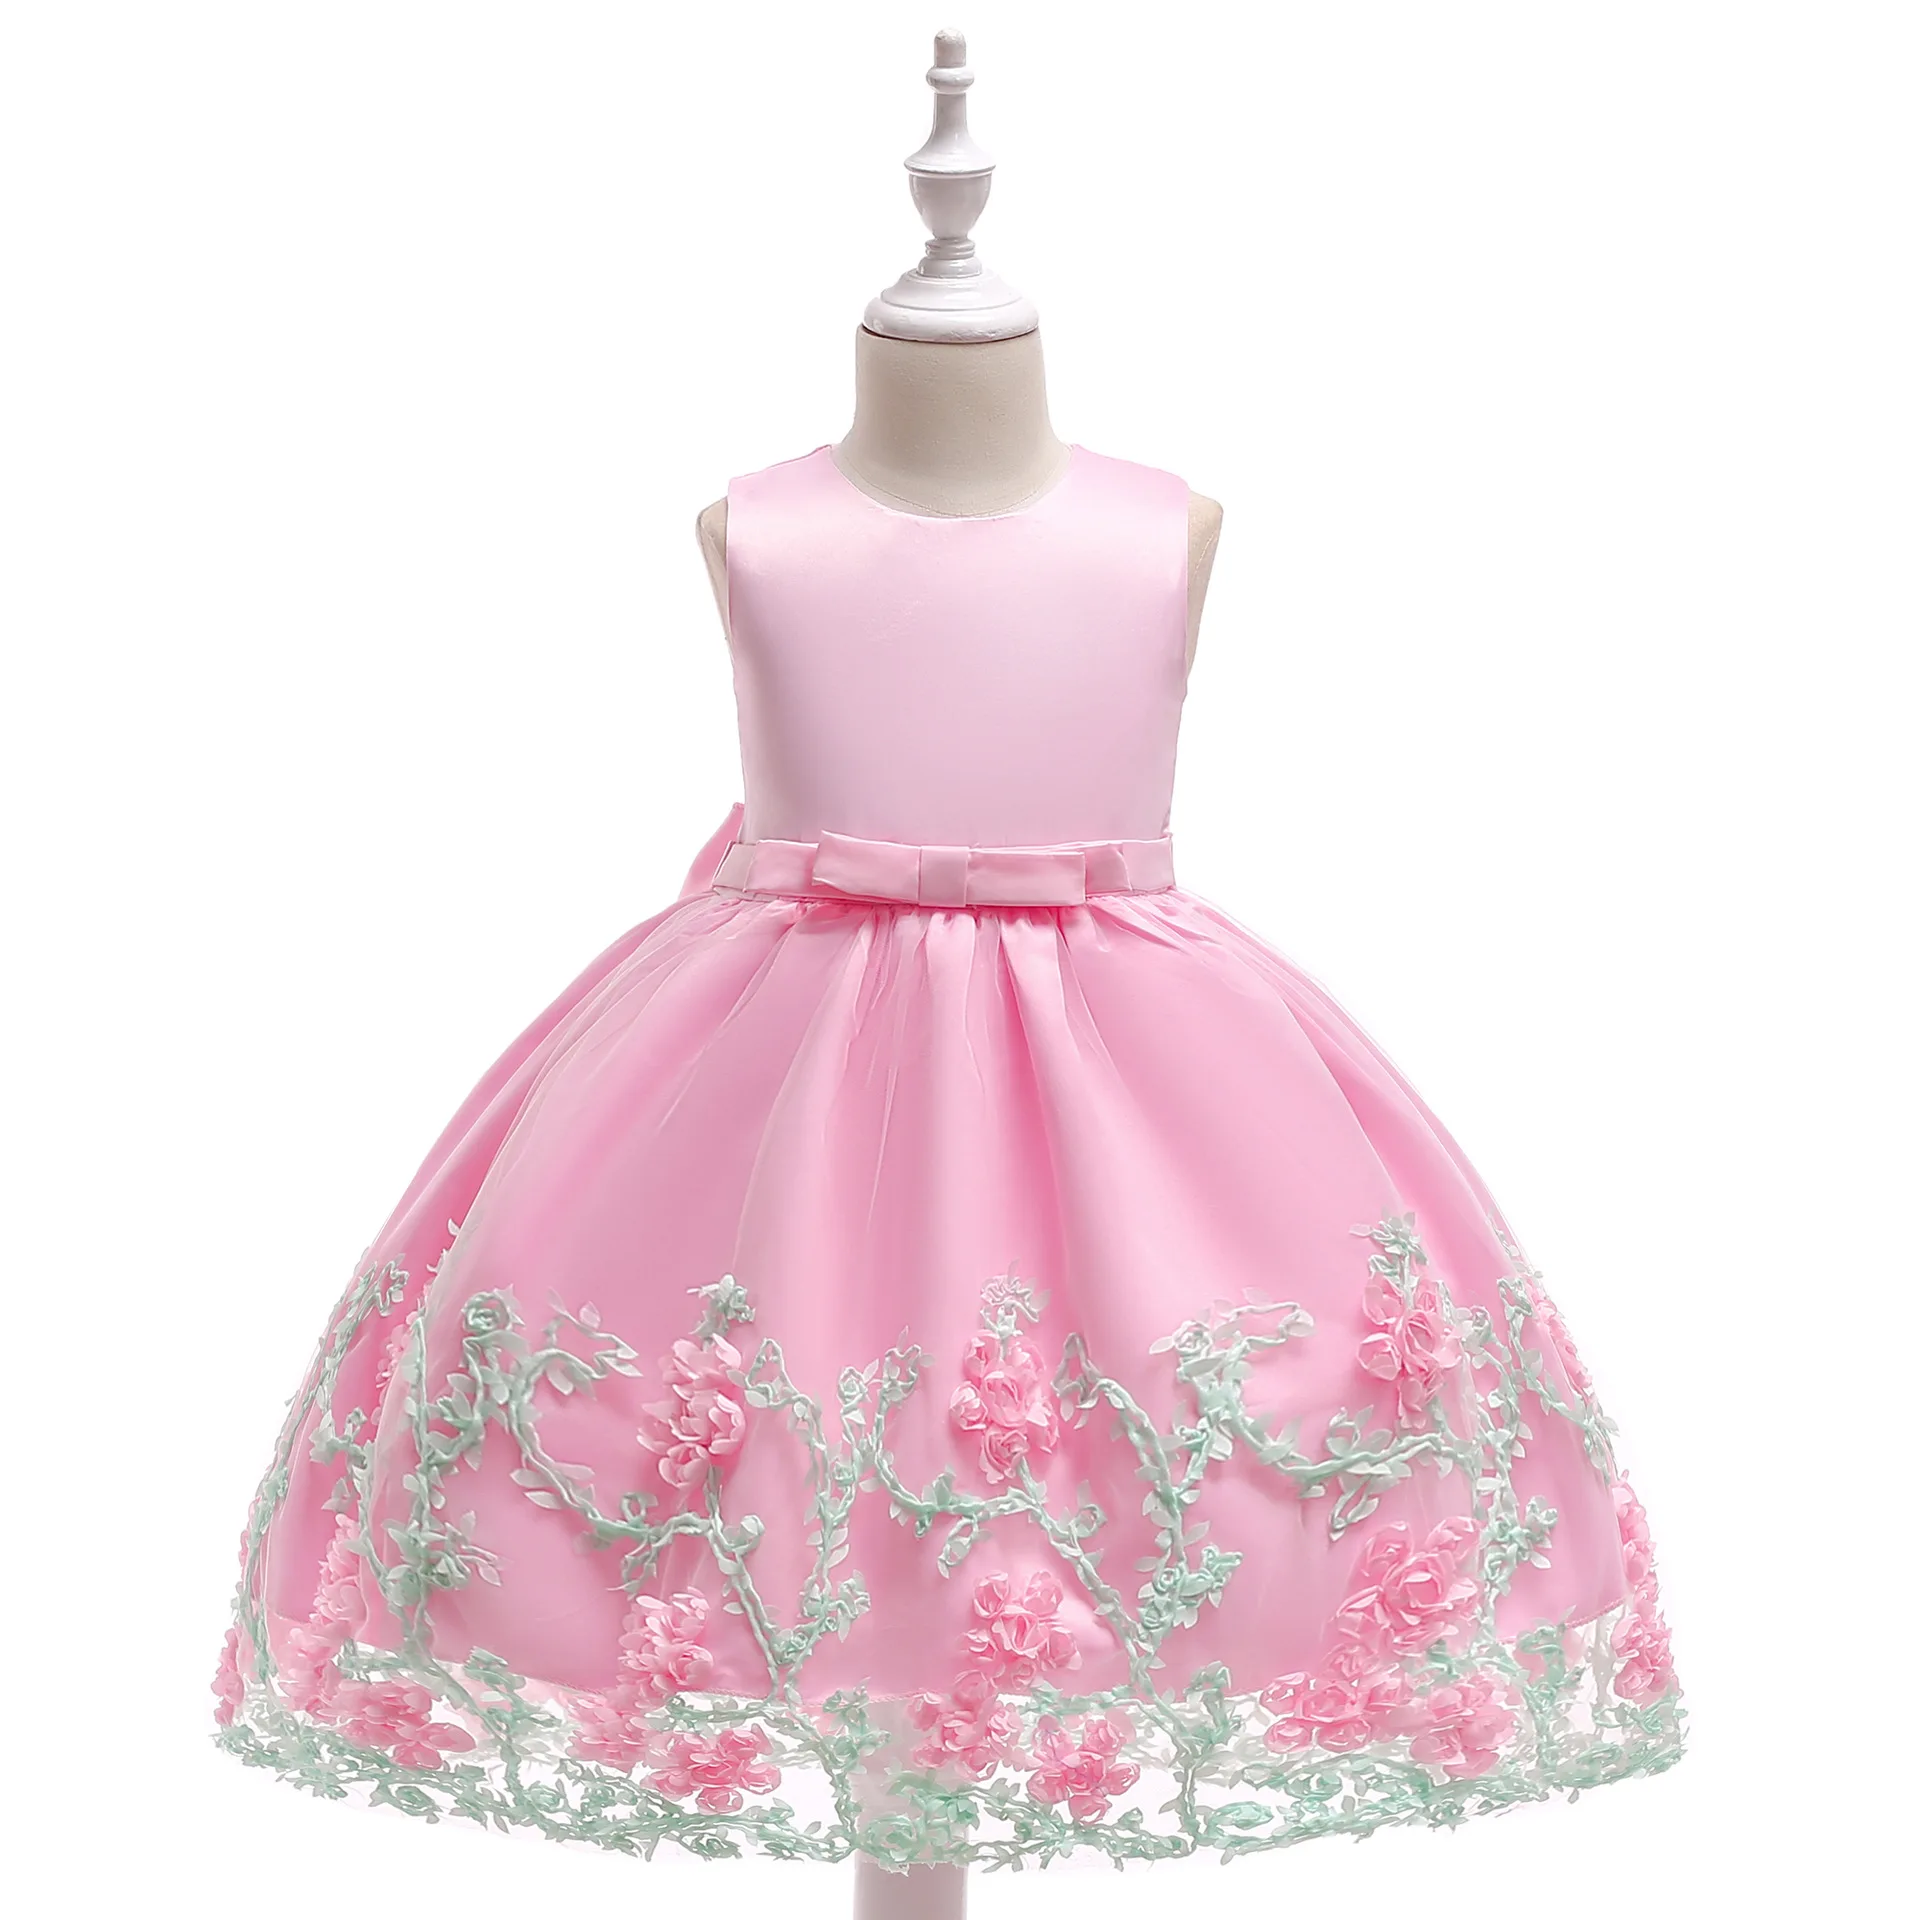 New Children's Dress Girl Party Dress Embroidery Flower Design - Buy ...